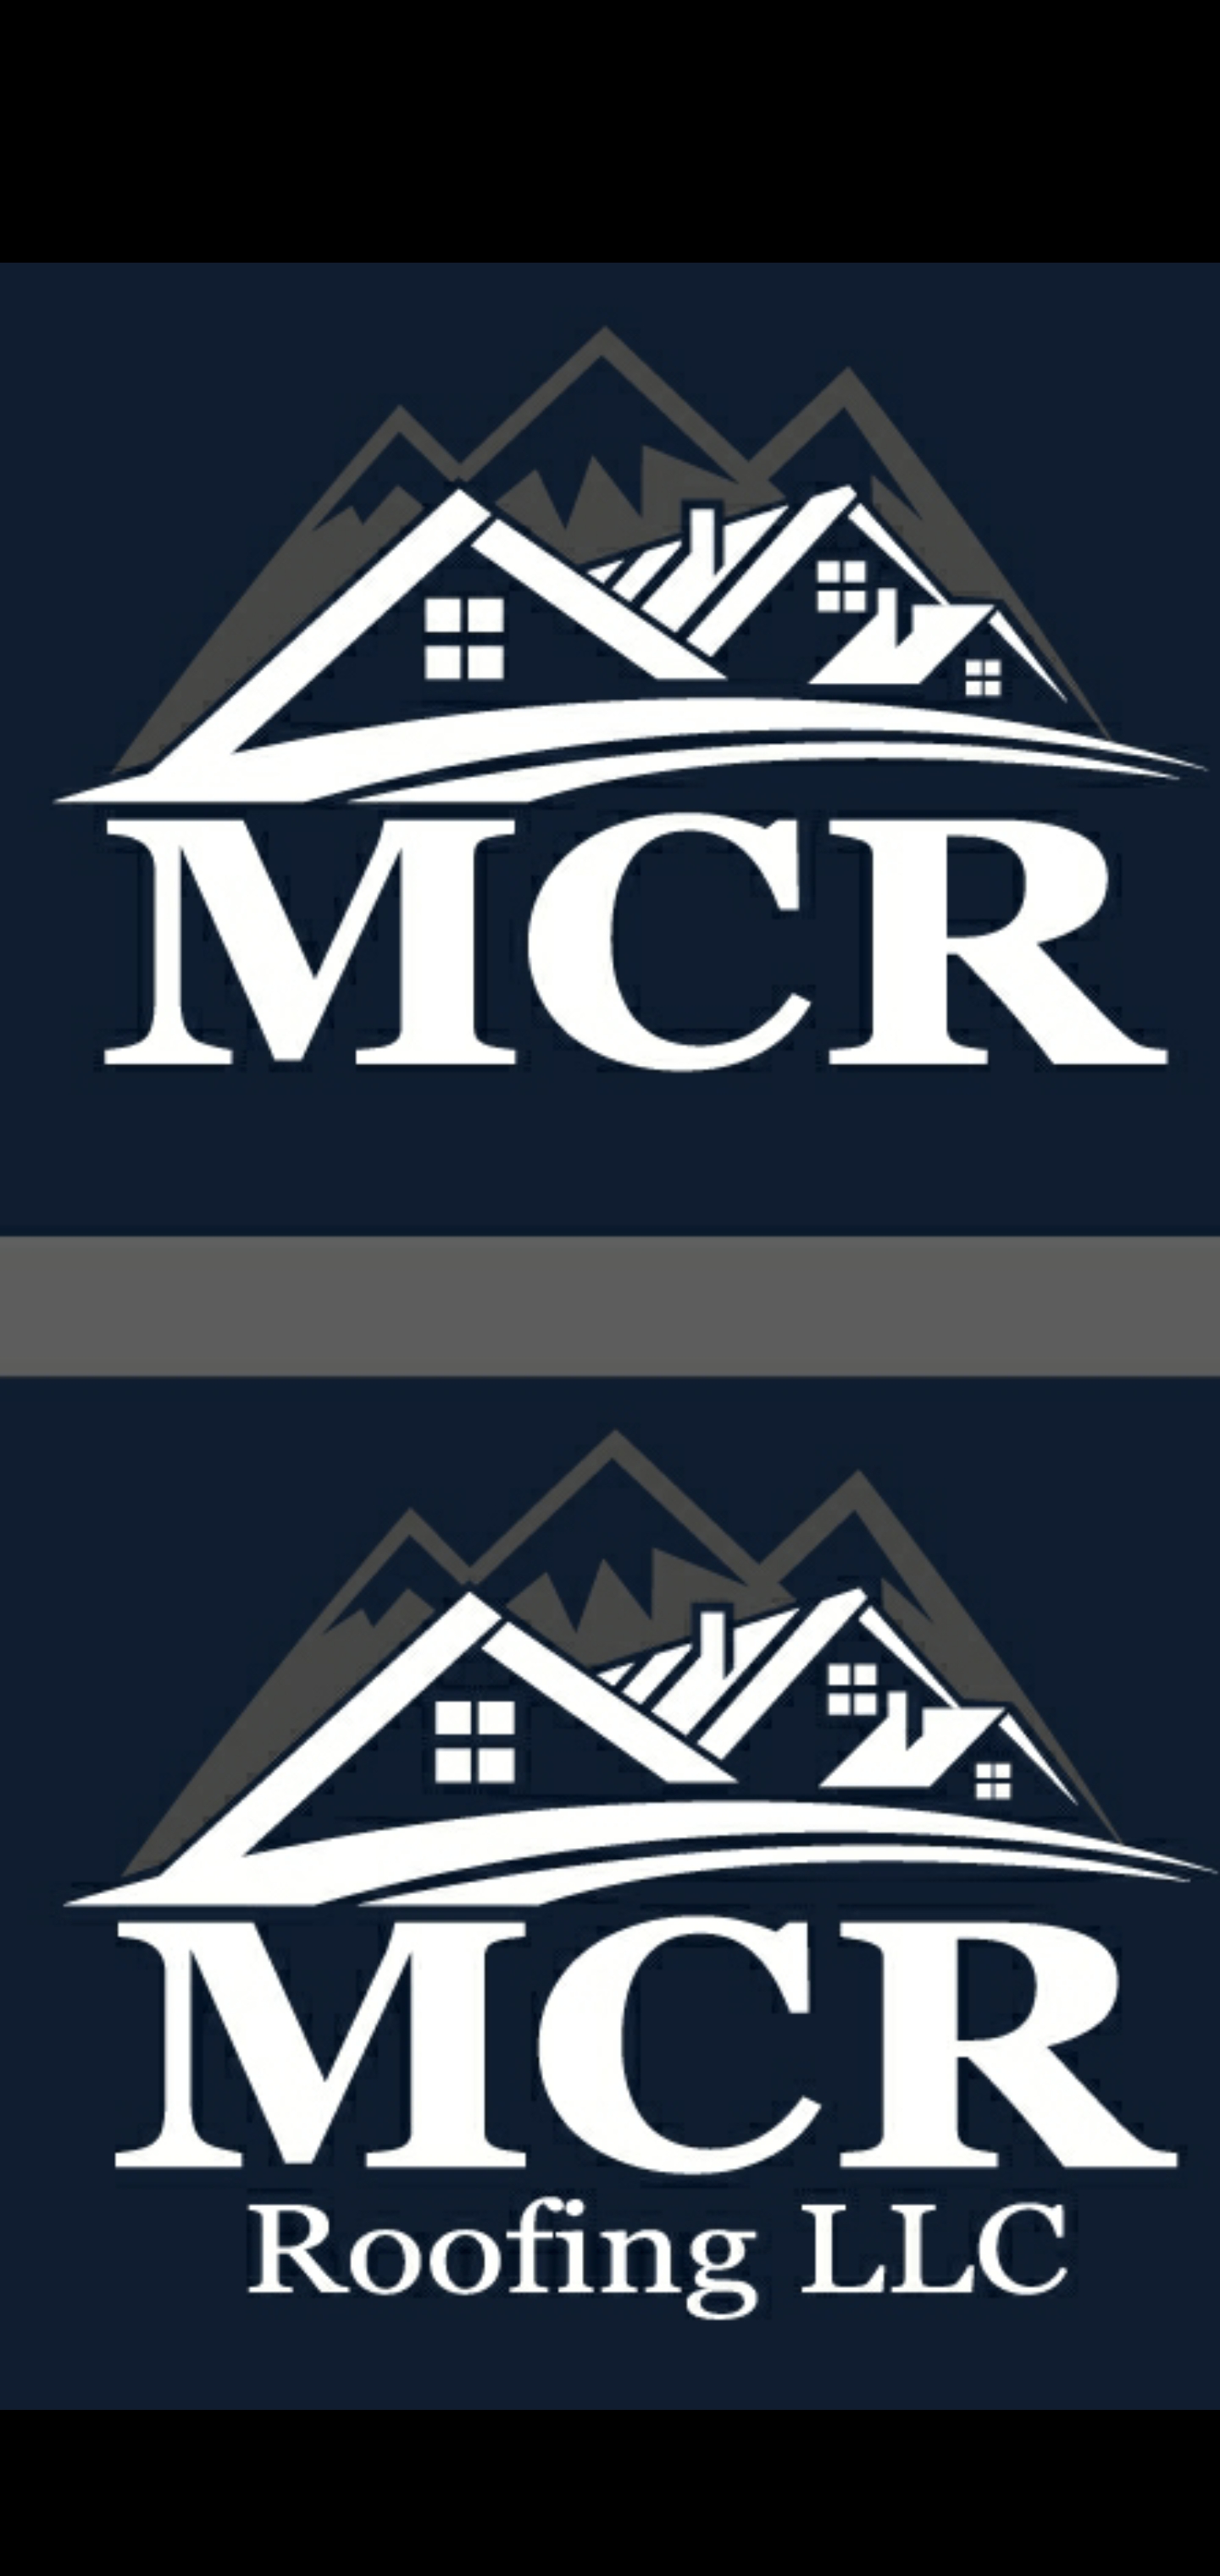 MCR Roofing Logo